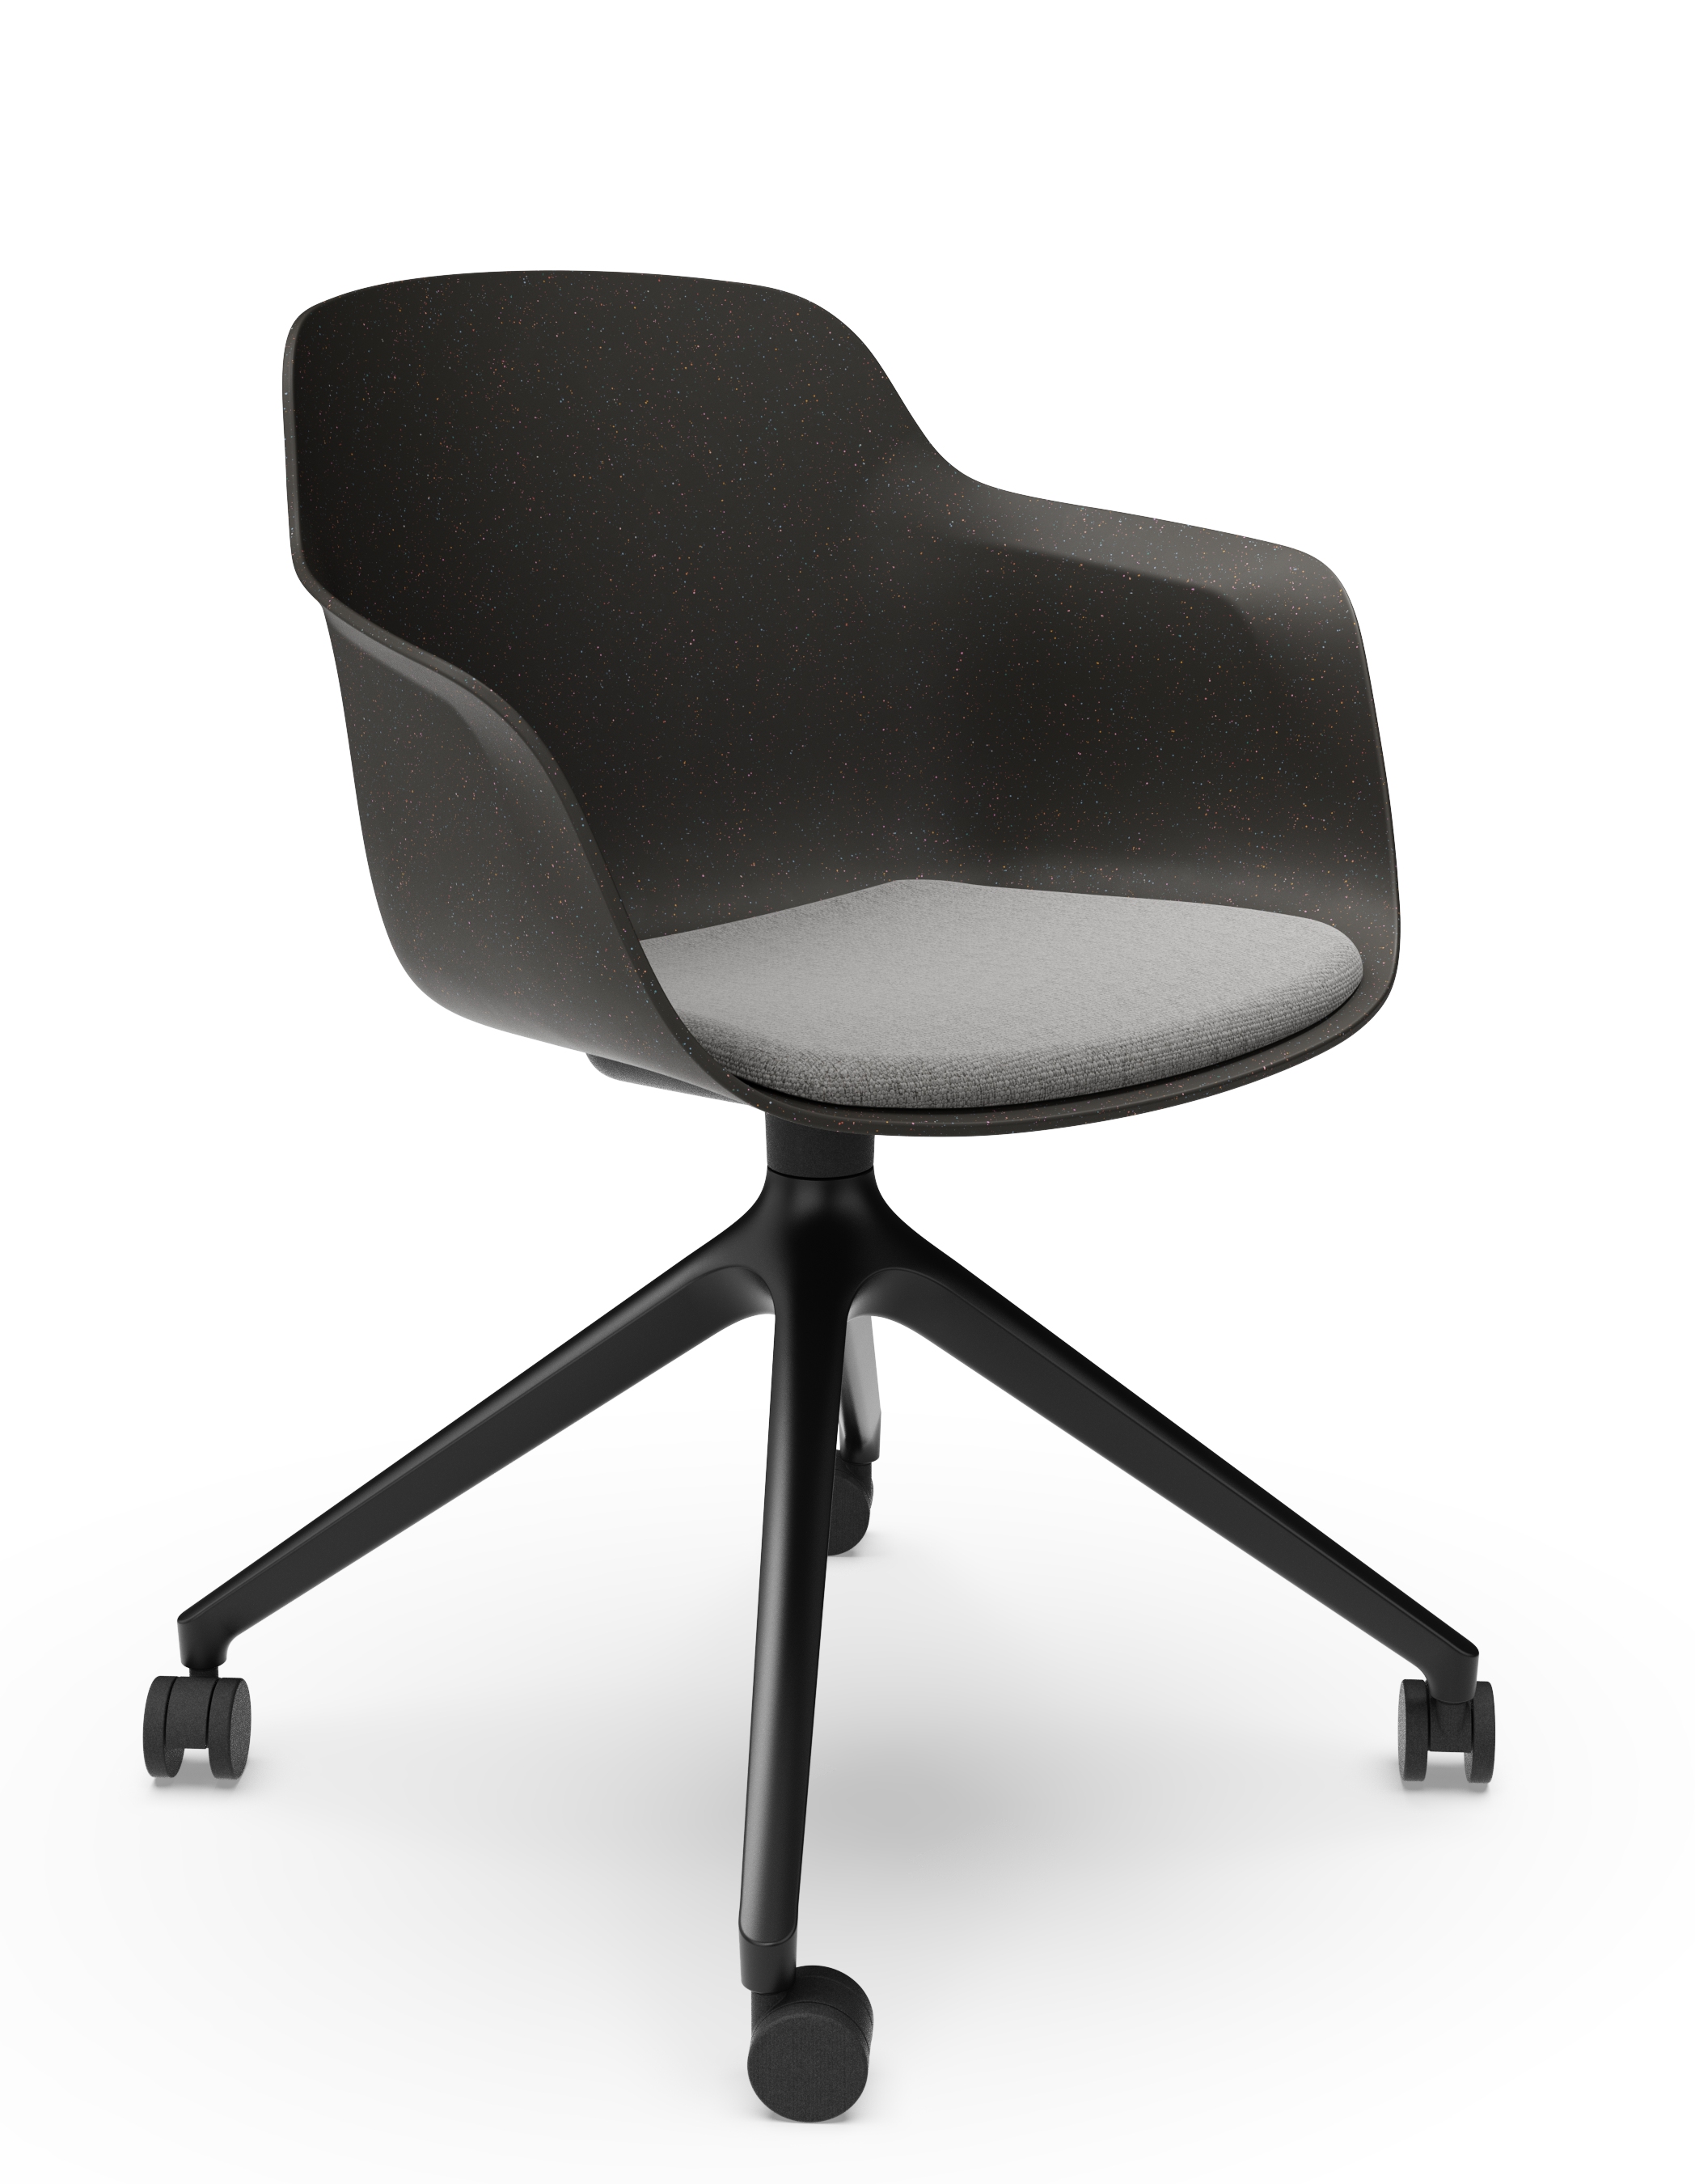 WS - Moto Tub Chair, Seatpad - Black 4-star castor base - CB